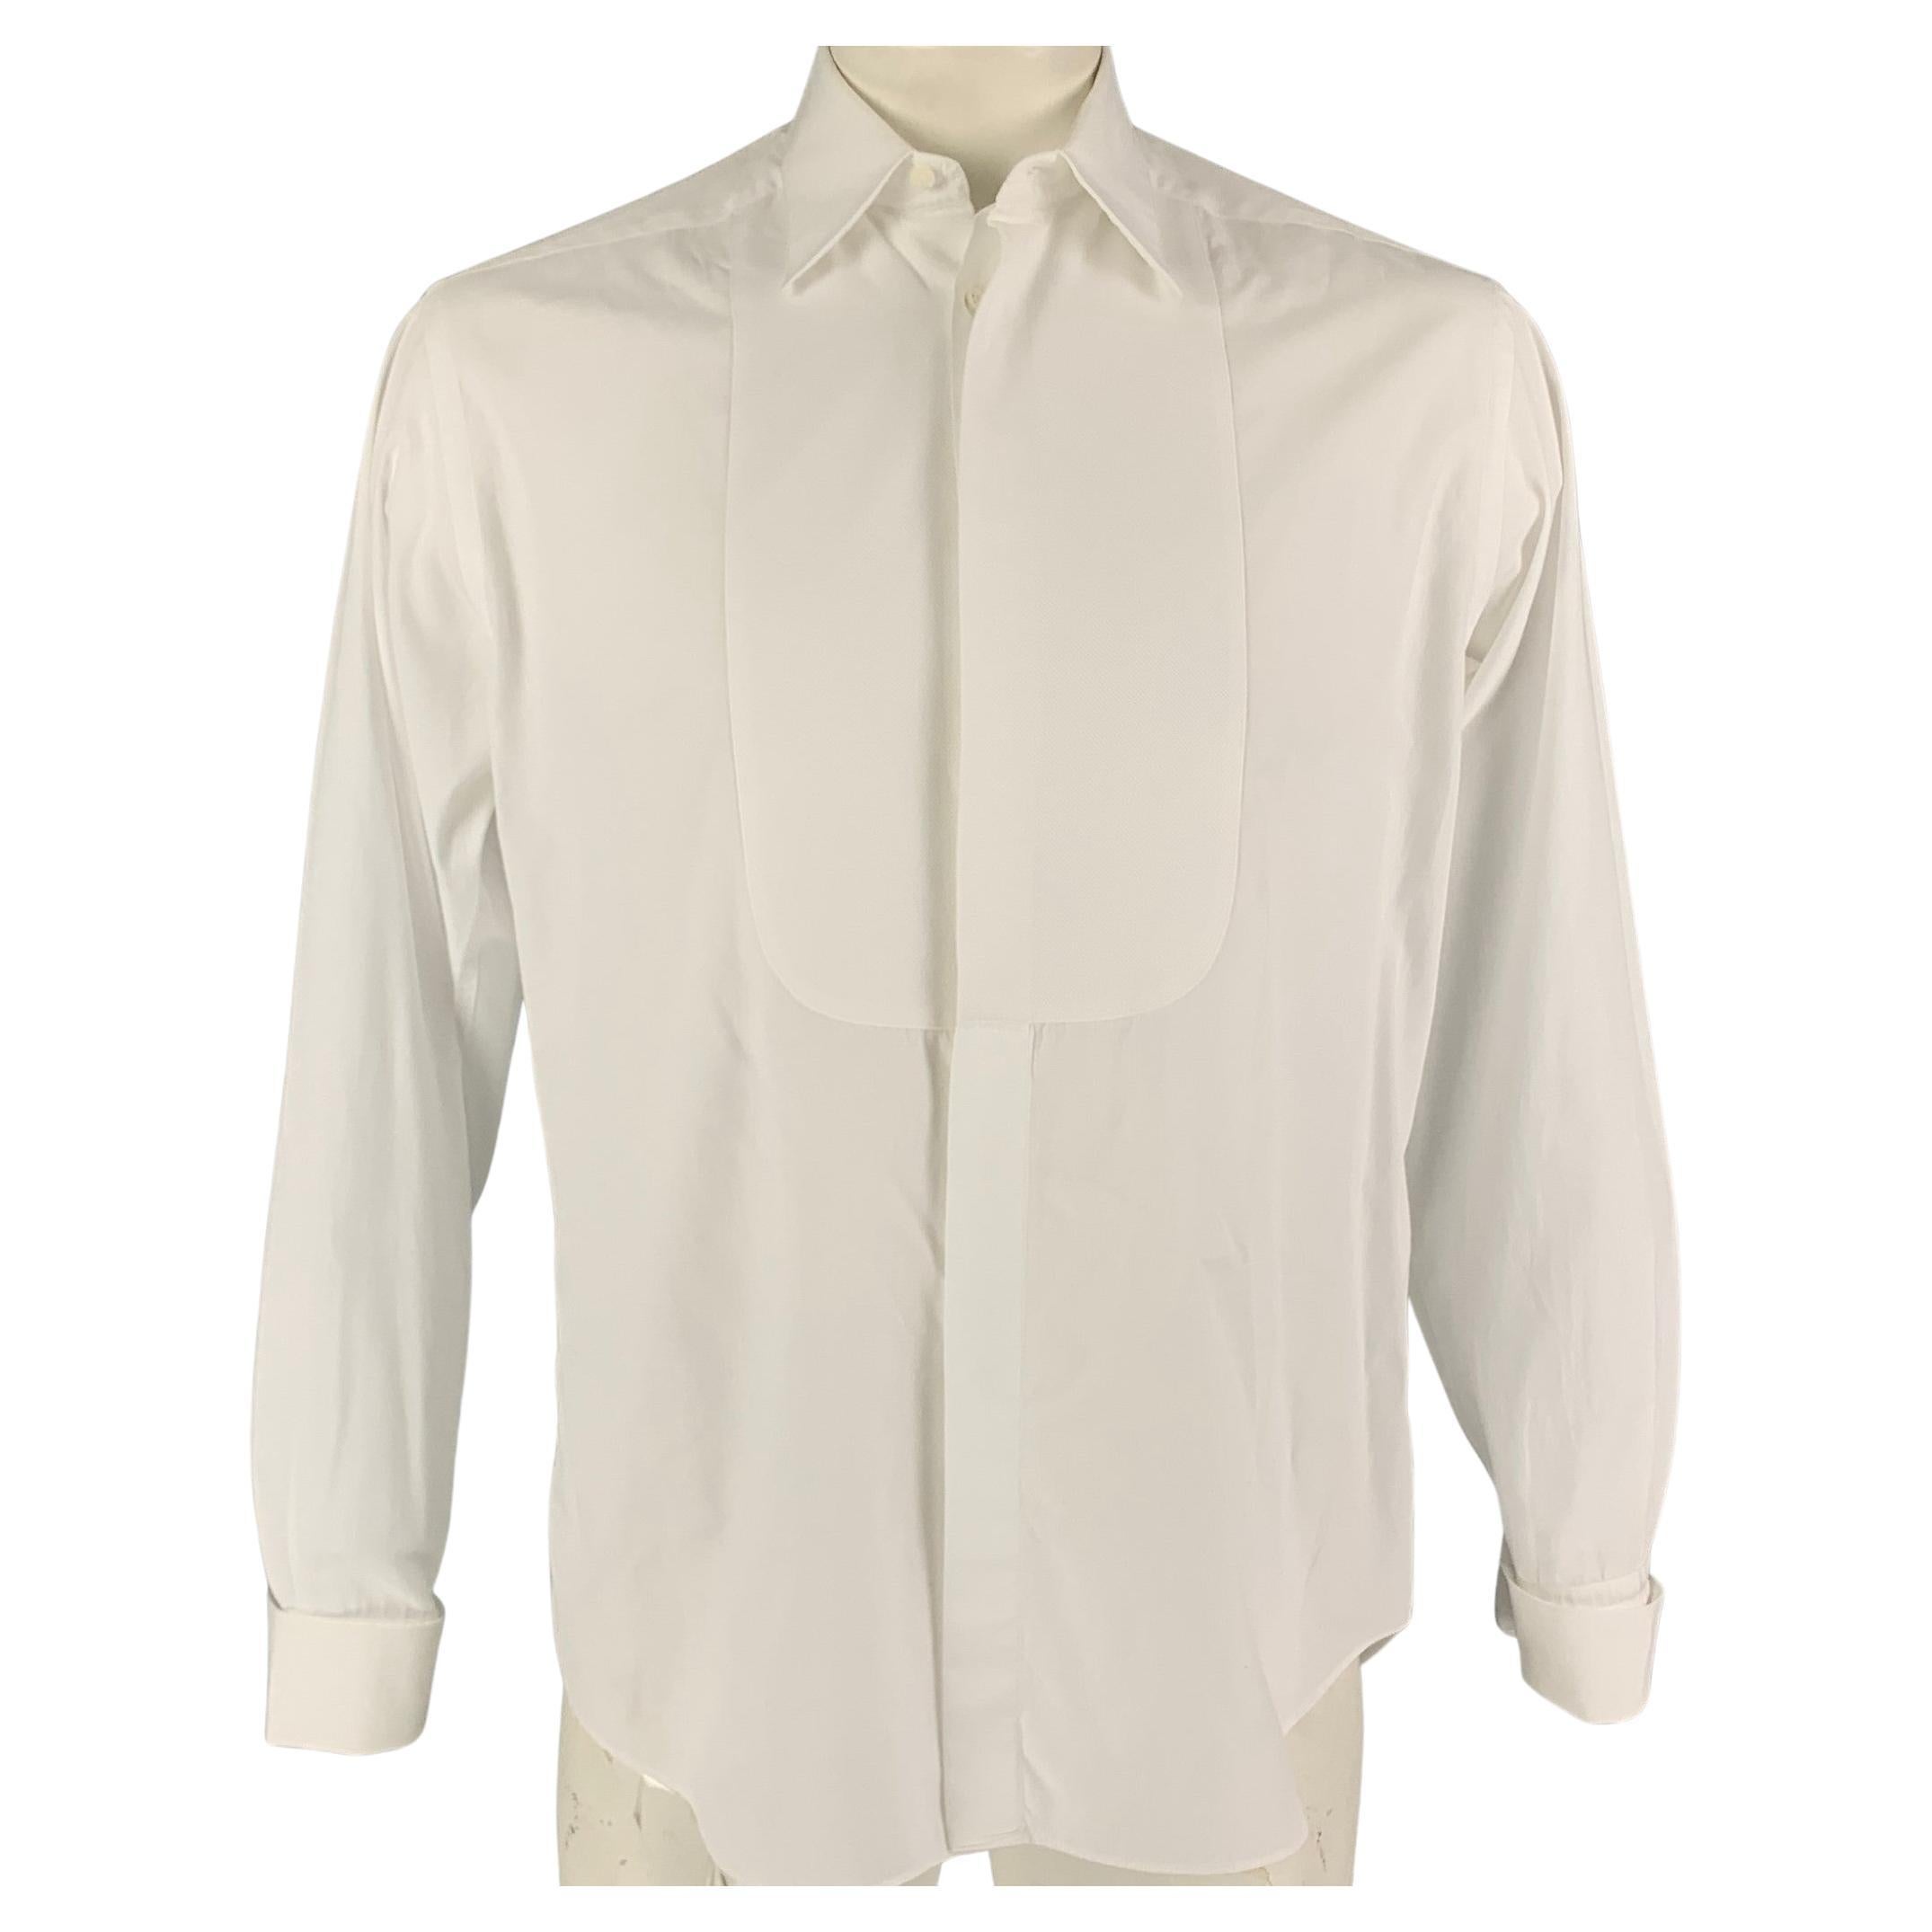 ARMANI COLLEZIONI Size L White Cotton Tuxedo Long Sleeve Shirt